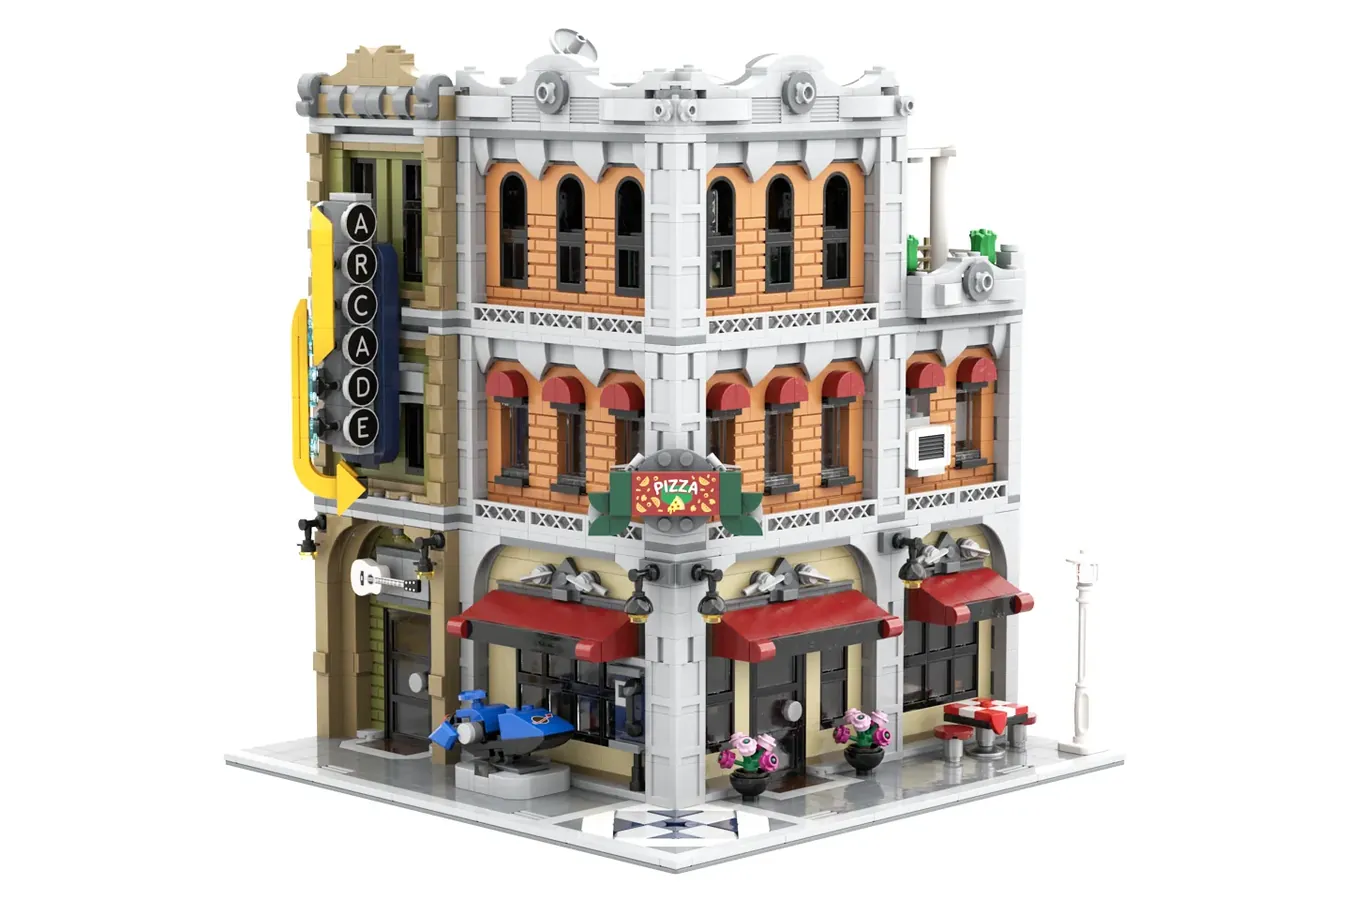 Lego (R) ideas for modular games Center Building